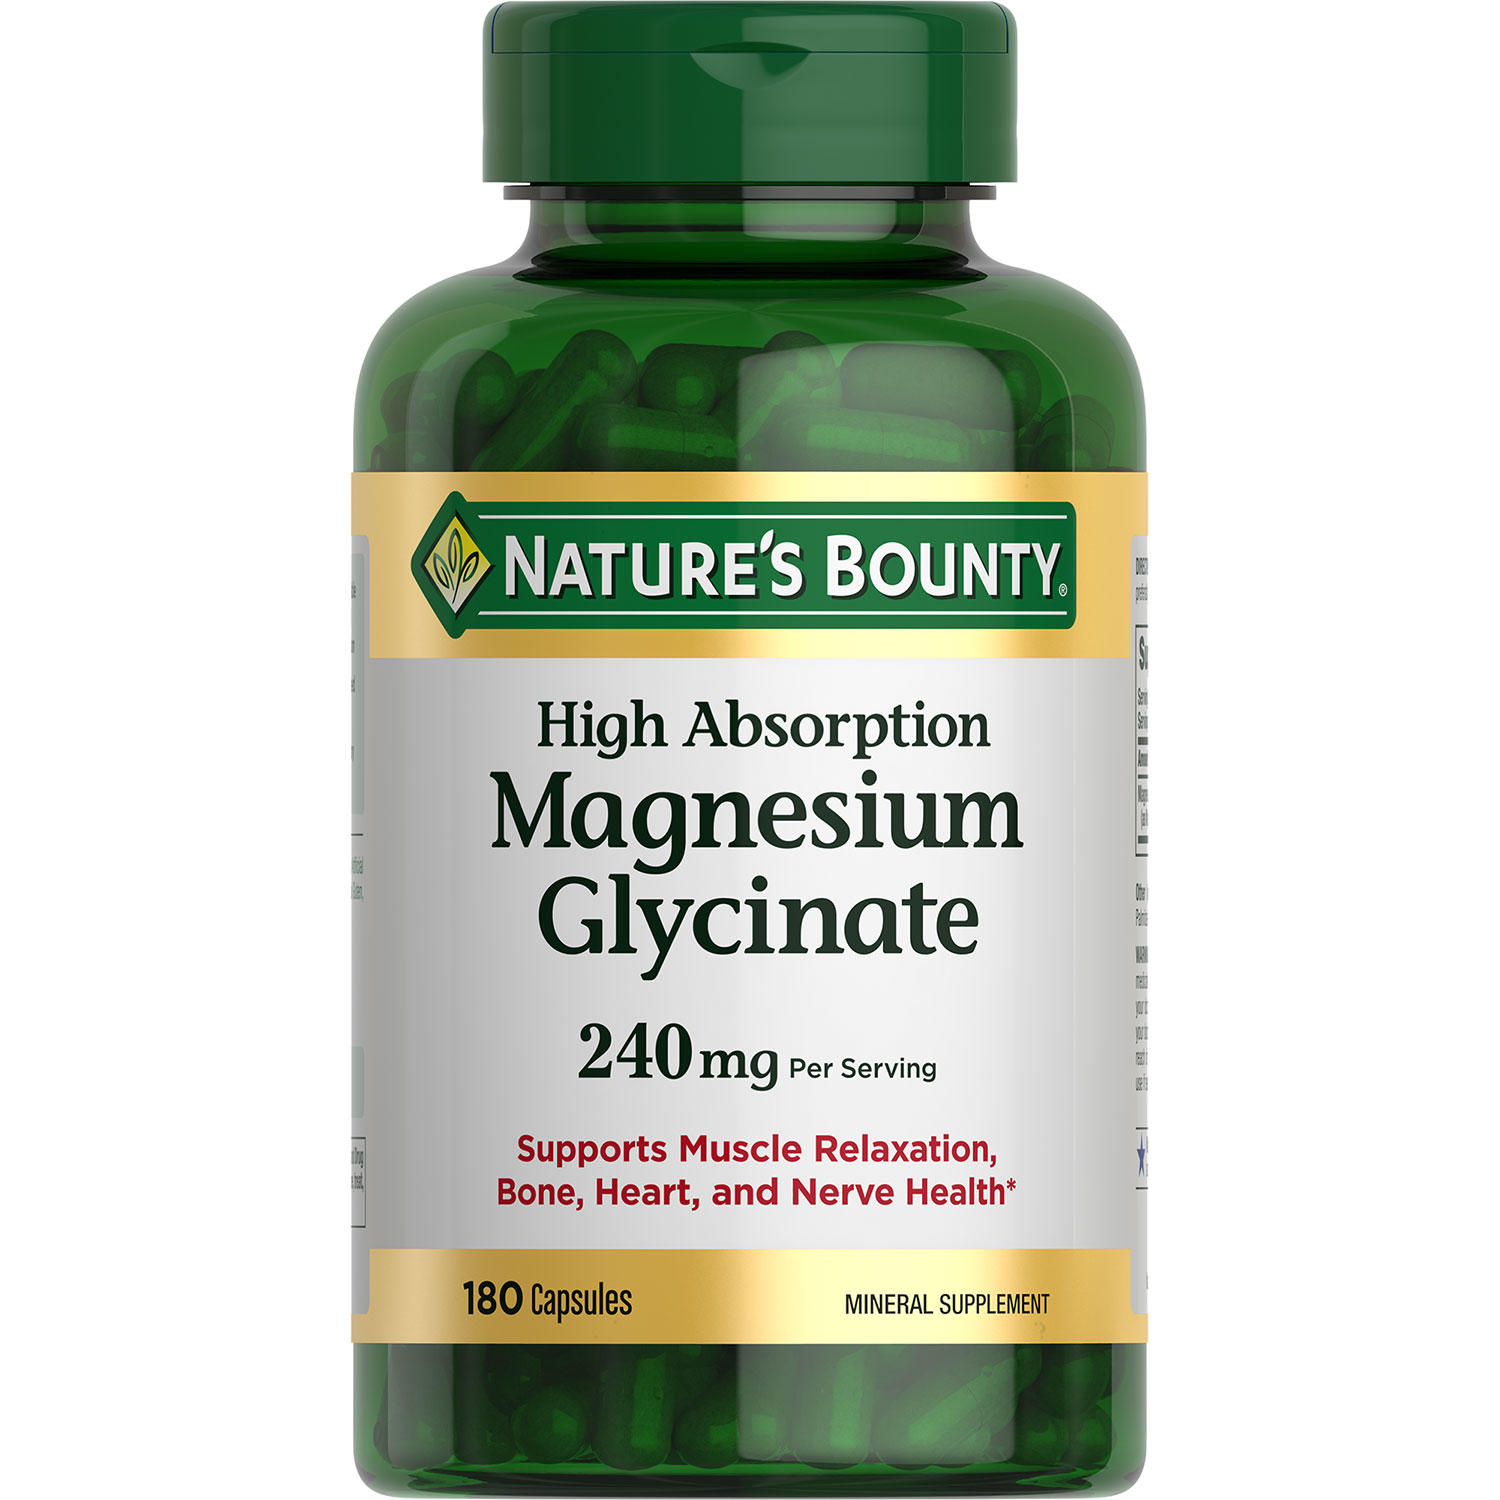 Nature's Bounty Magnesium Glycinate 240mg Supplement Capsules (180 ct.)